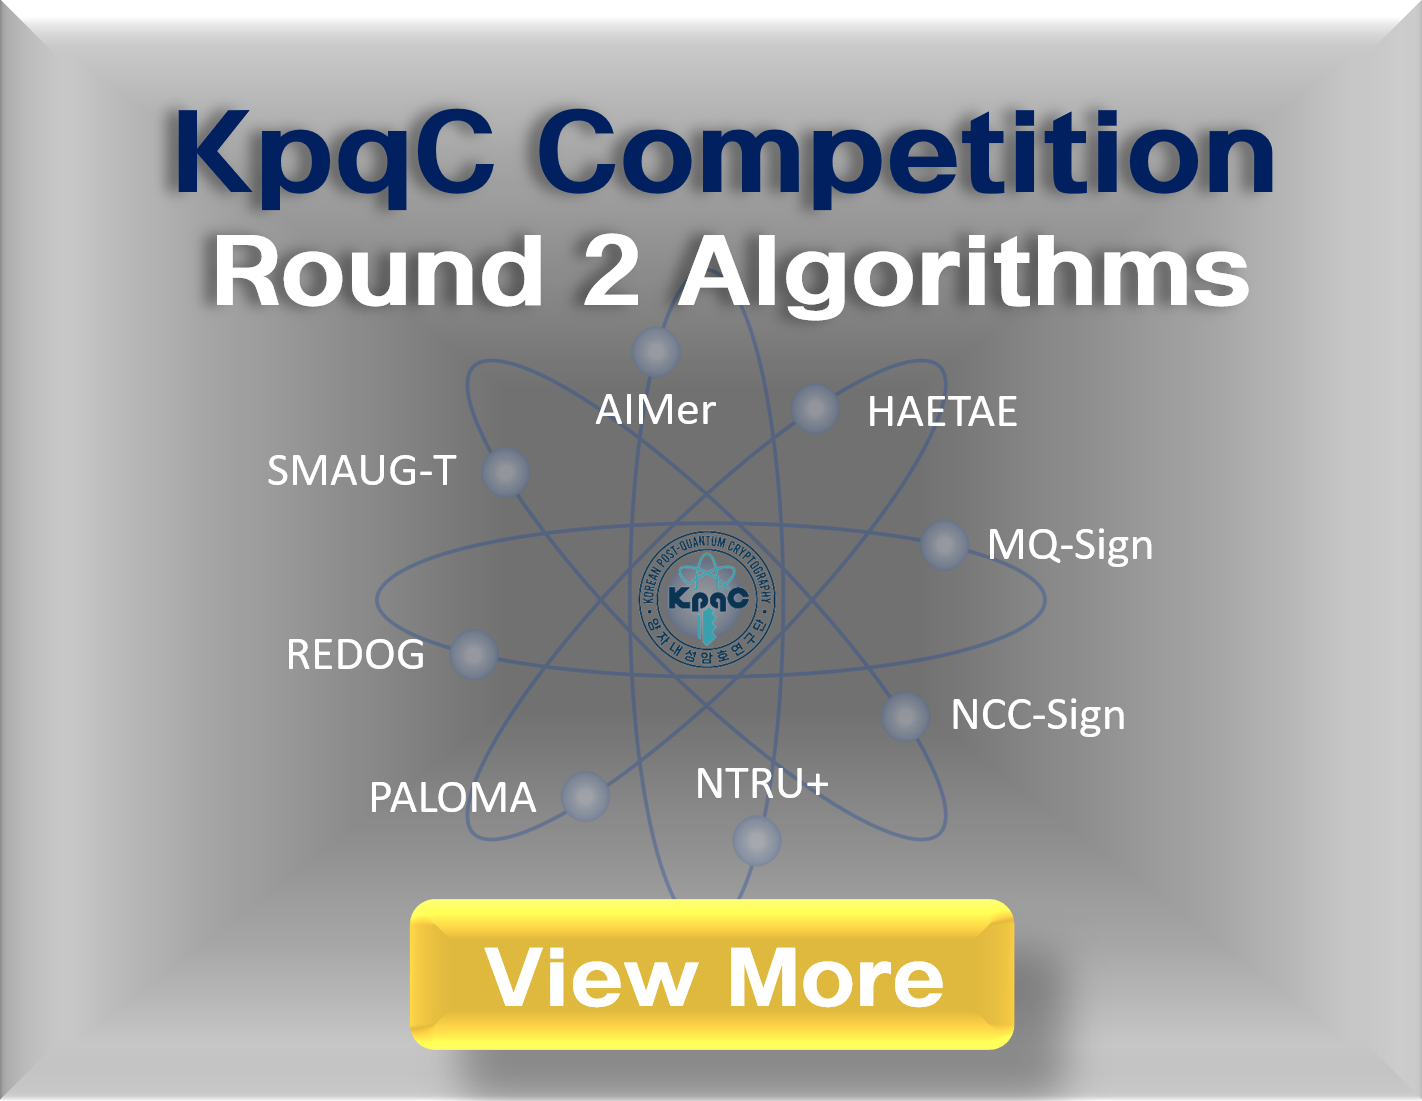 KpqC Competition Round 2 Algorithms